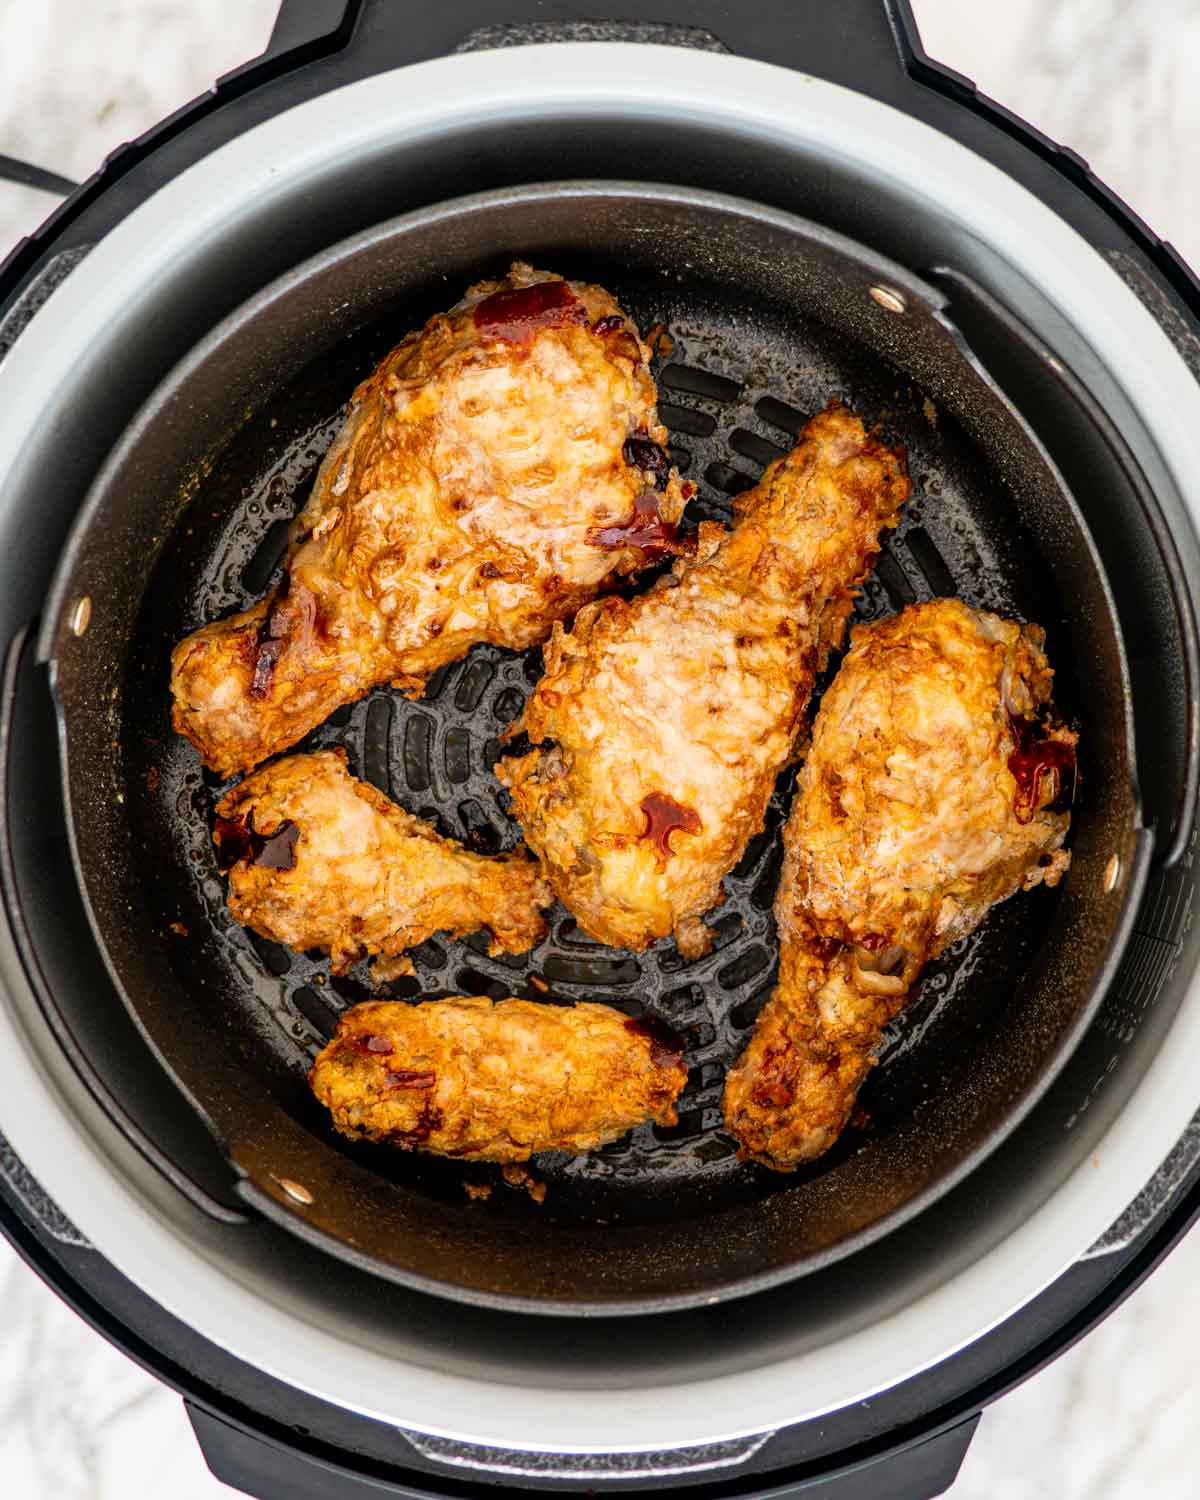 frying chicken in an air fryer